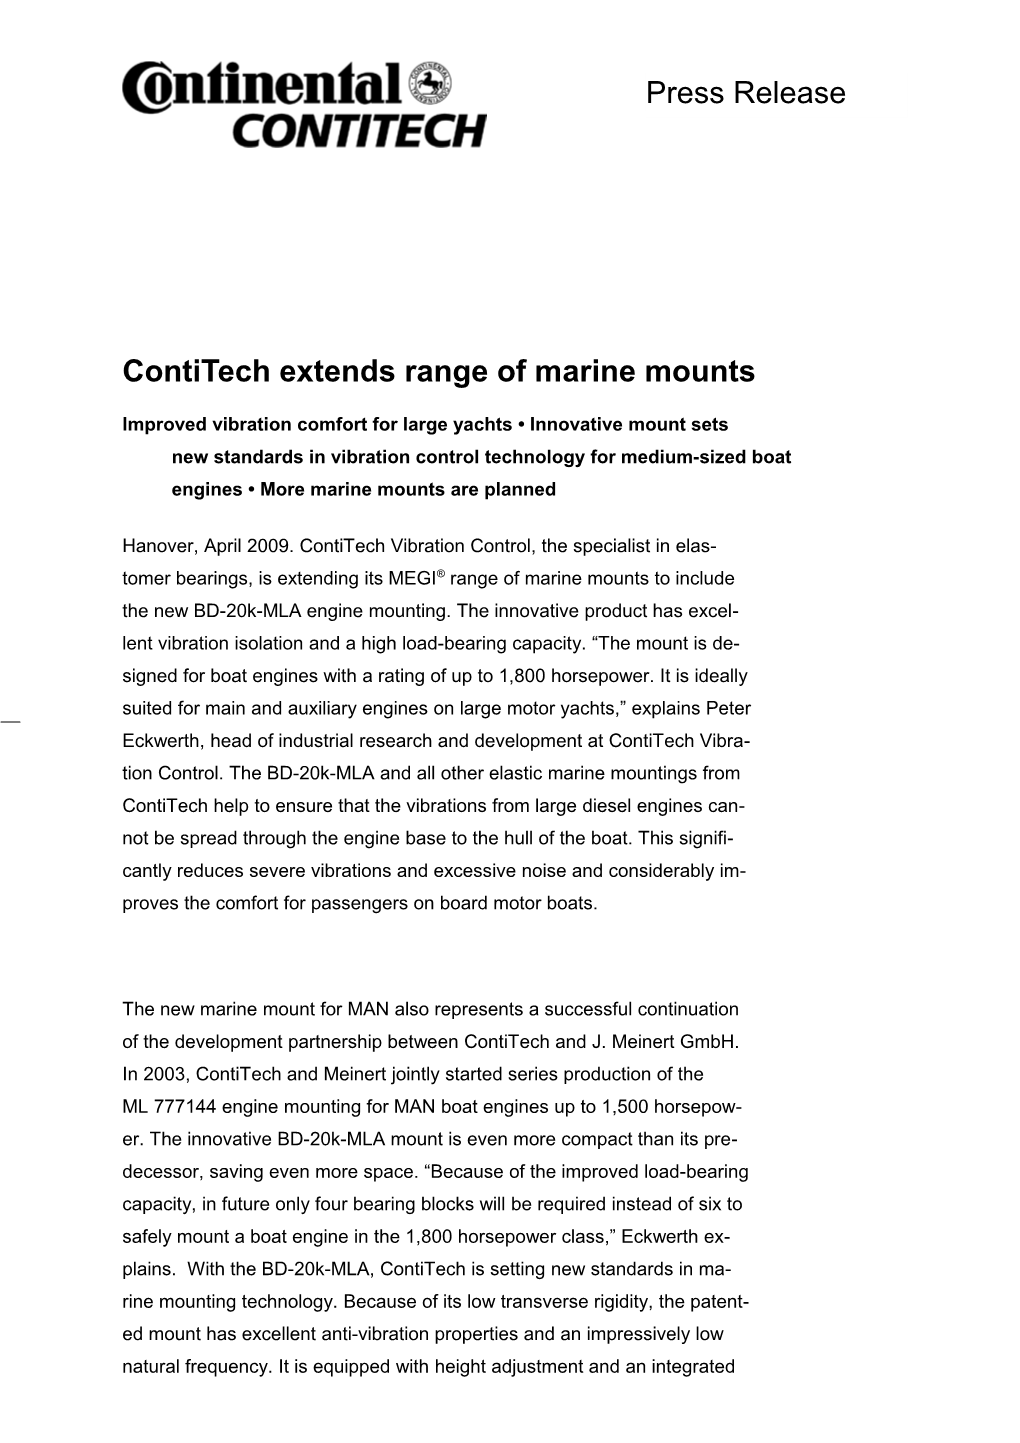 Contitech Extends Range of Marine Mounts